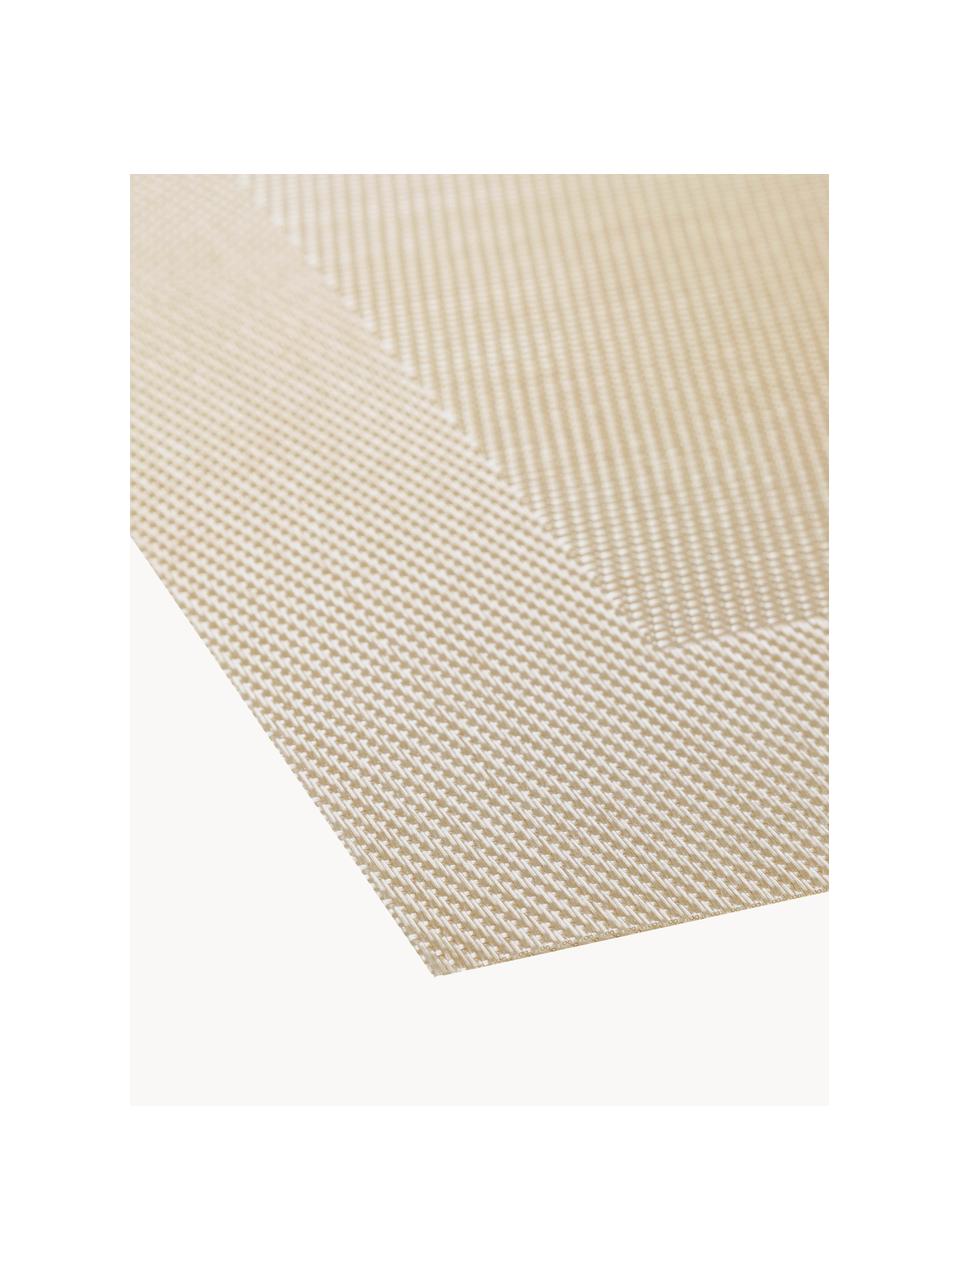 Kunststoffen placemats Trefl, 2 stuks, Kunststof, Lichtbeige, B 33 x L 46 cm